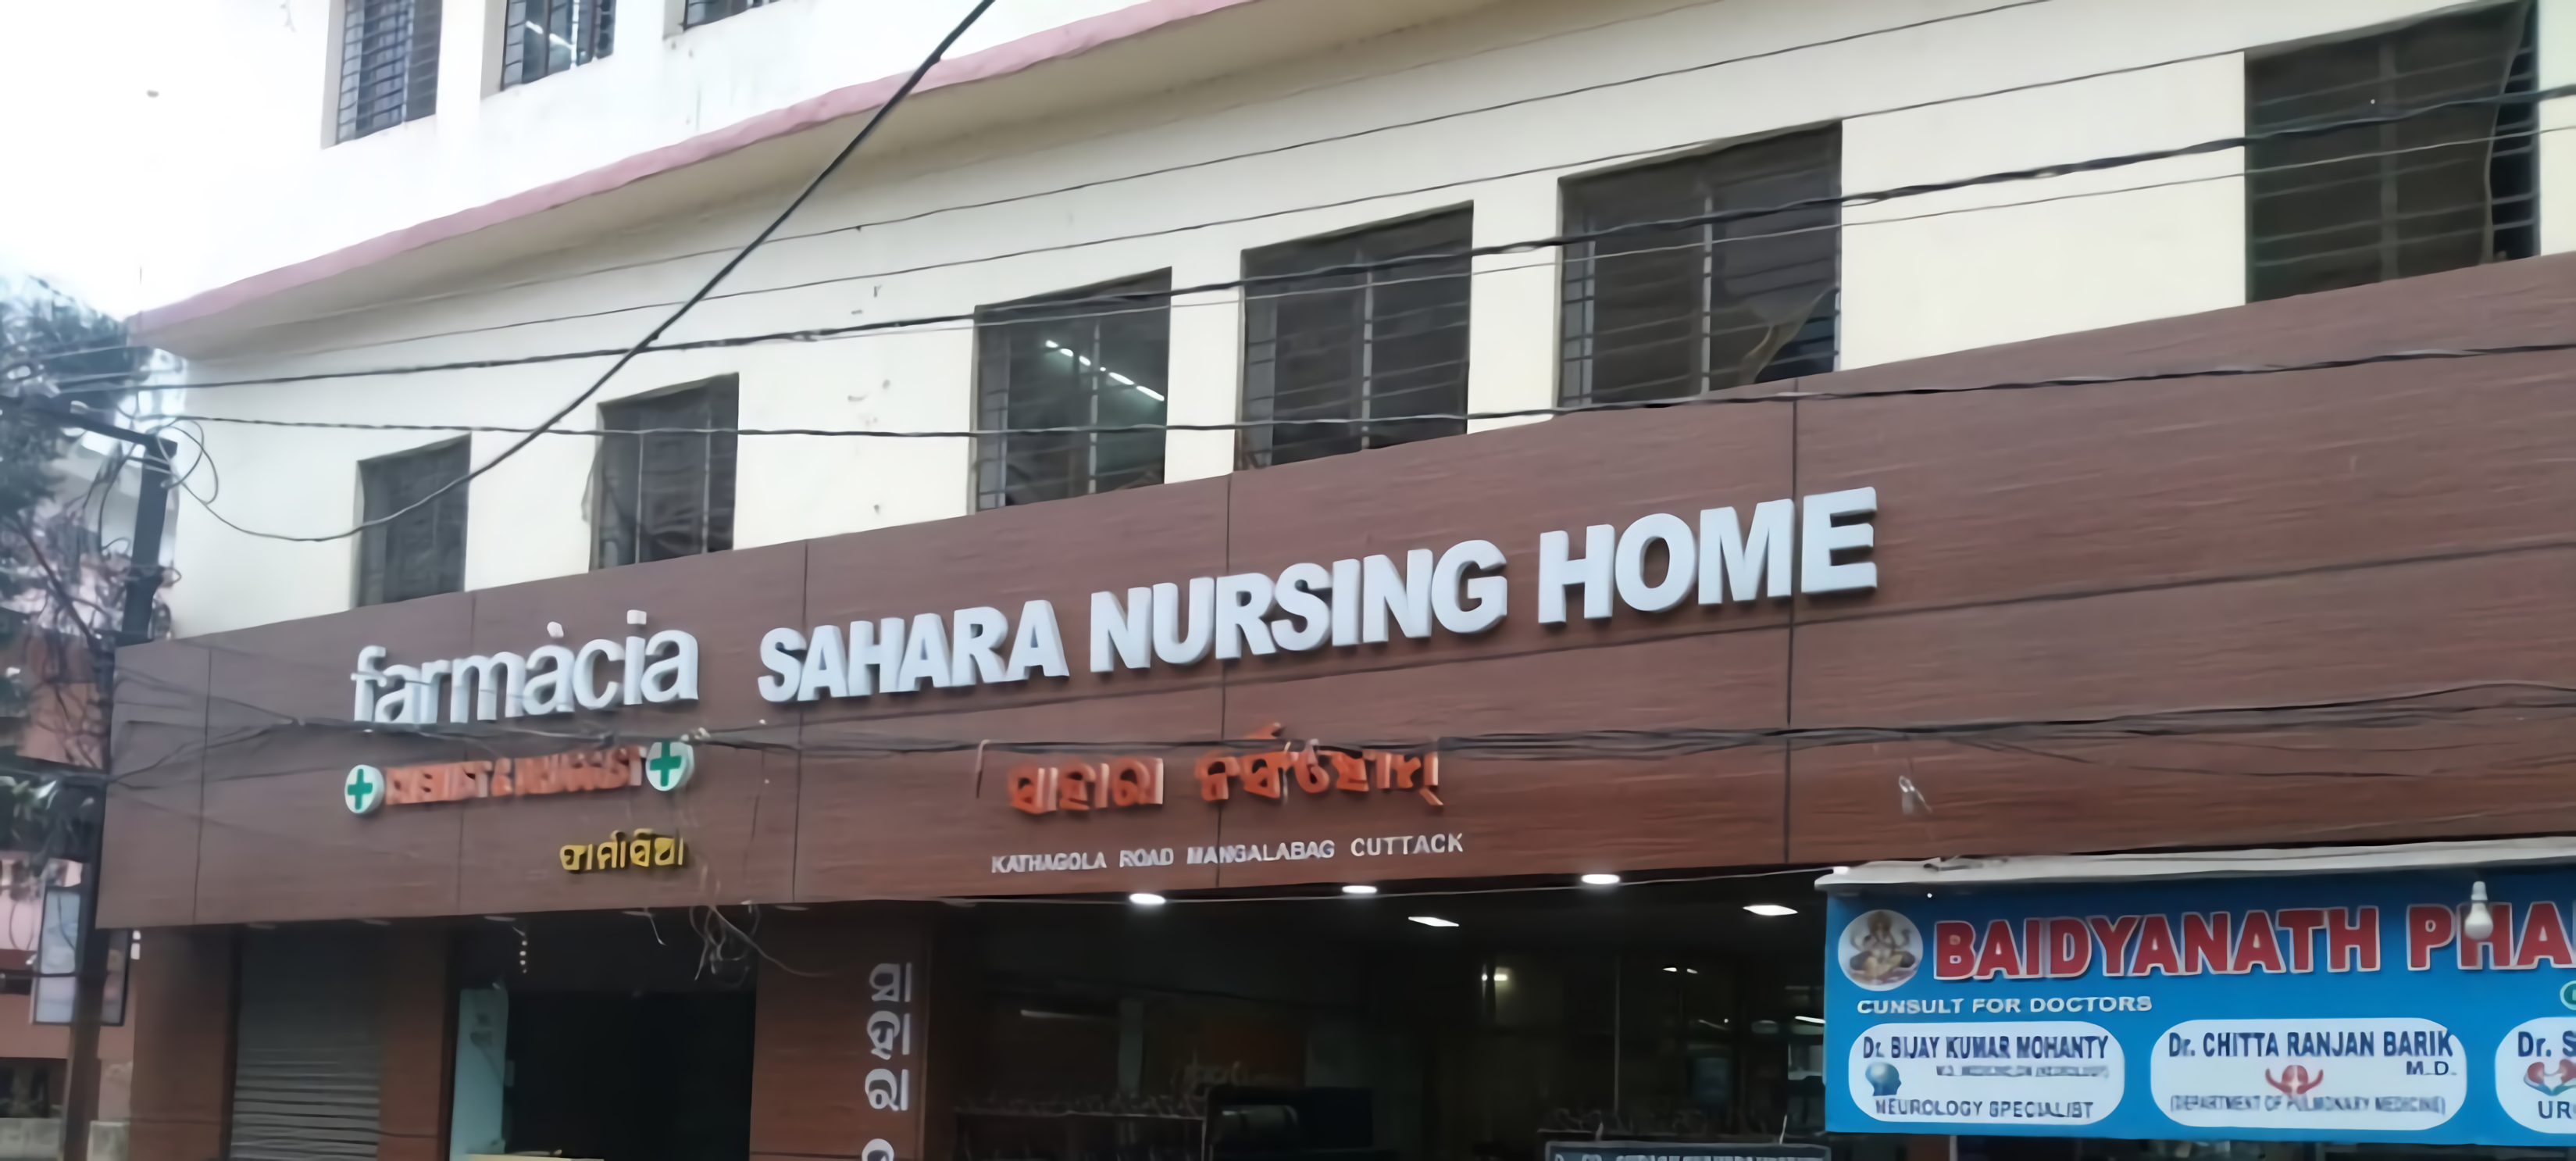 Sahara Nursing Home